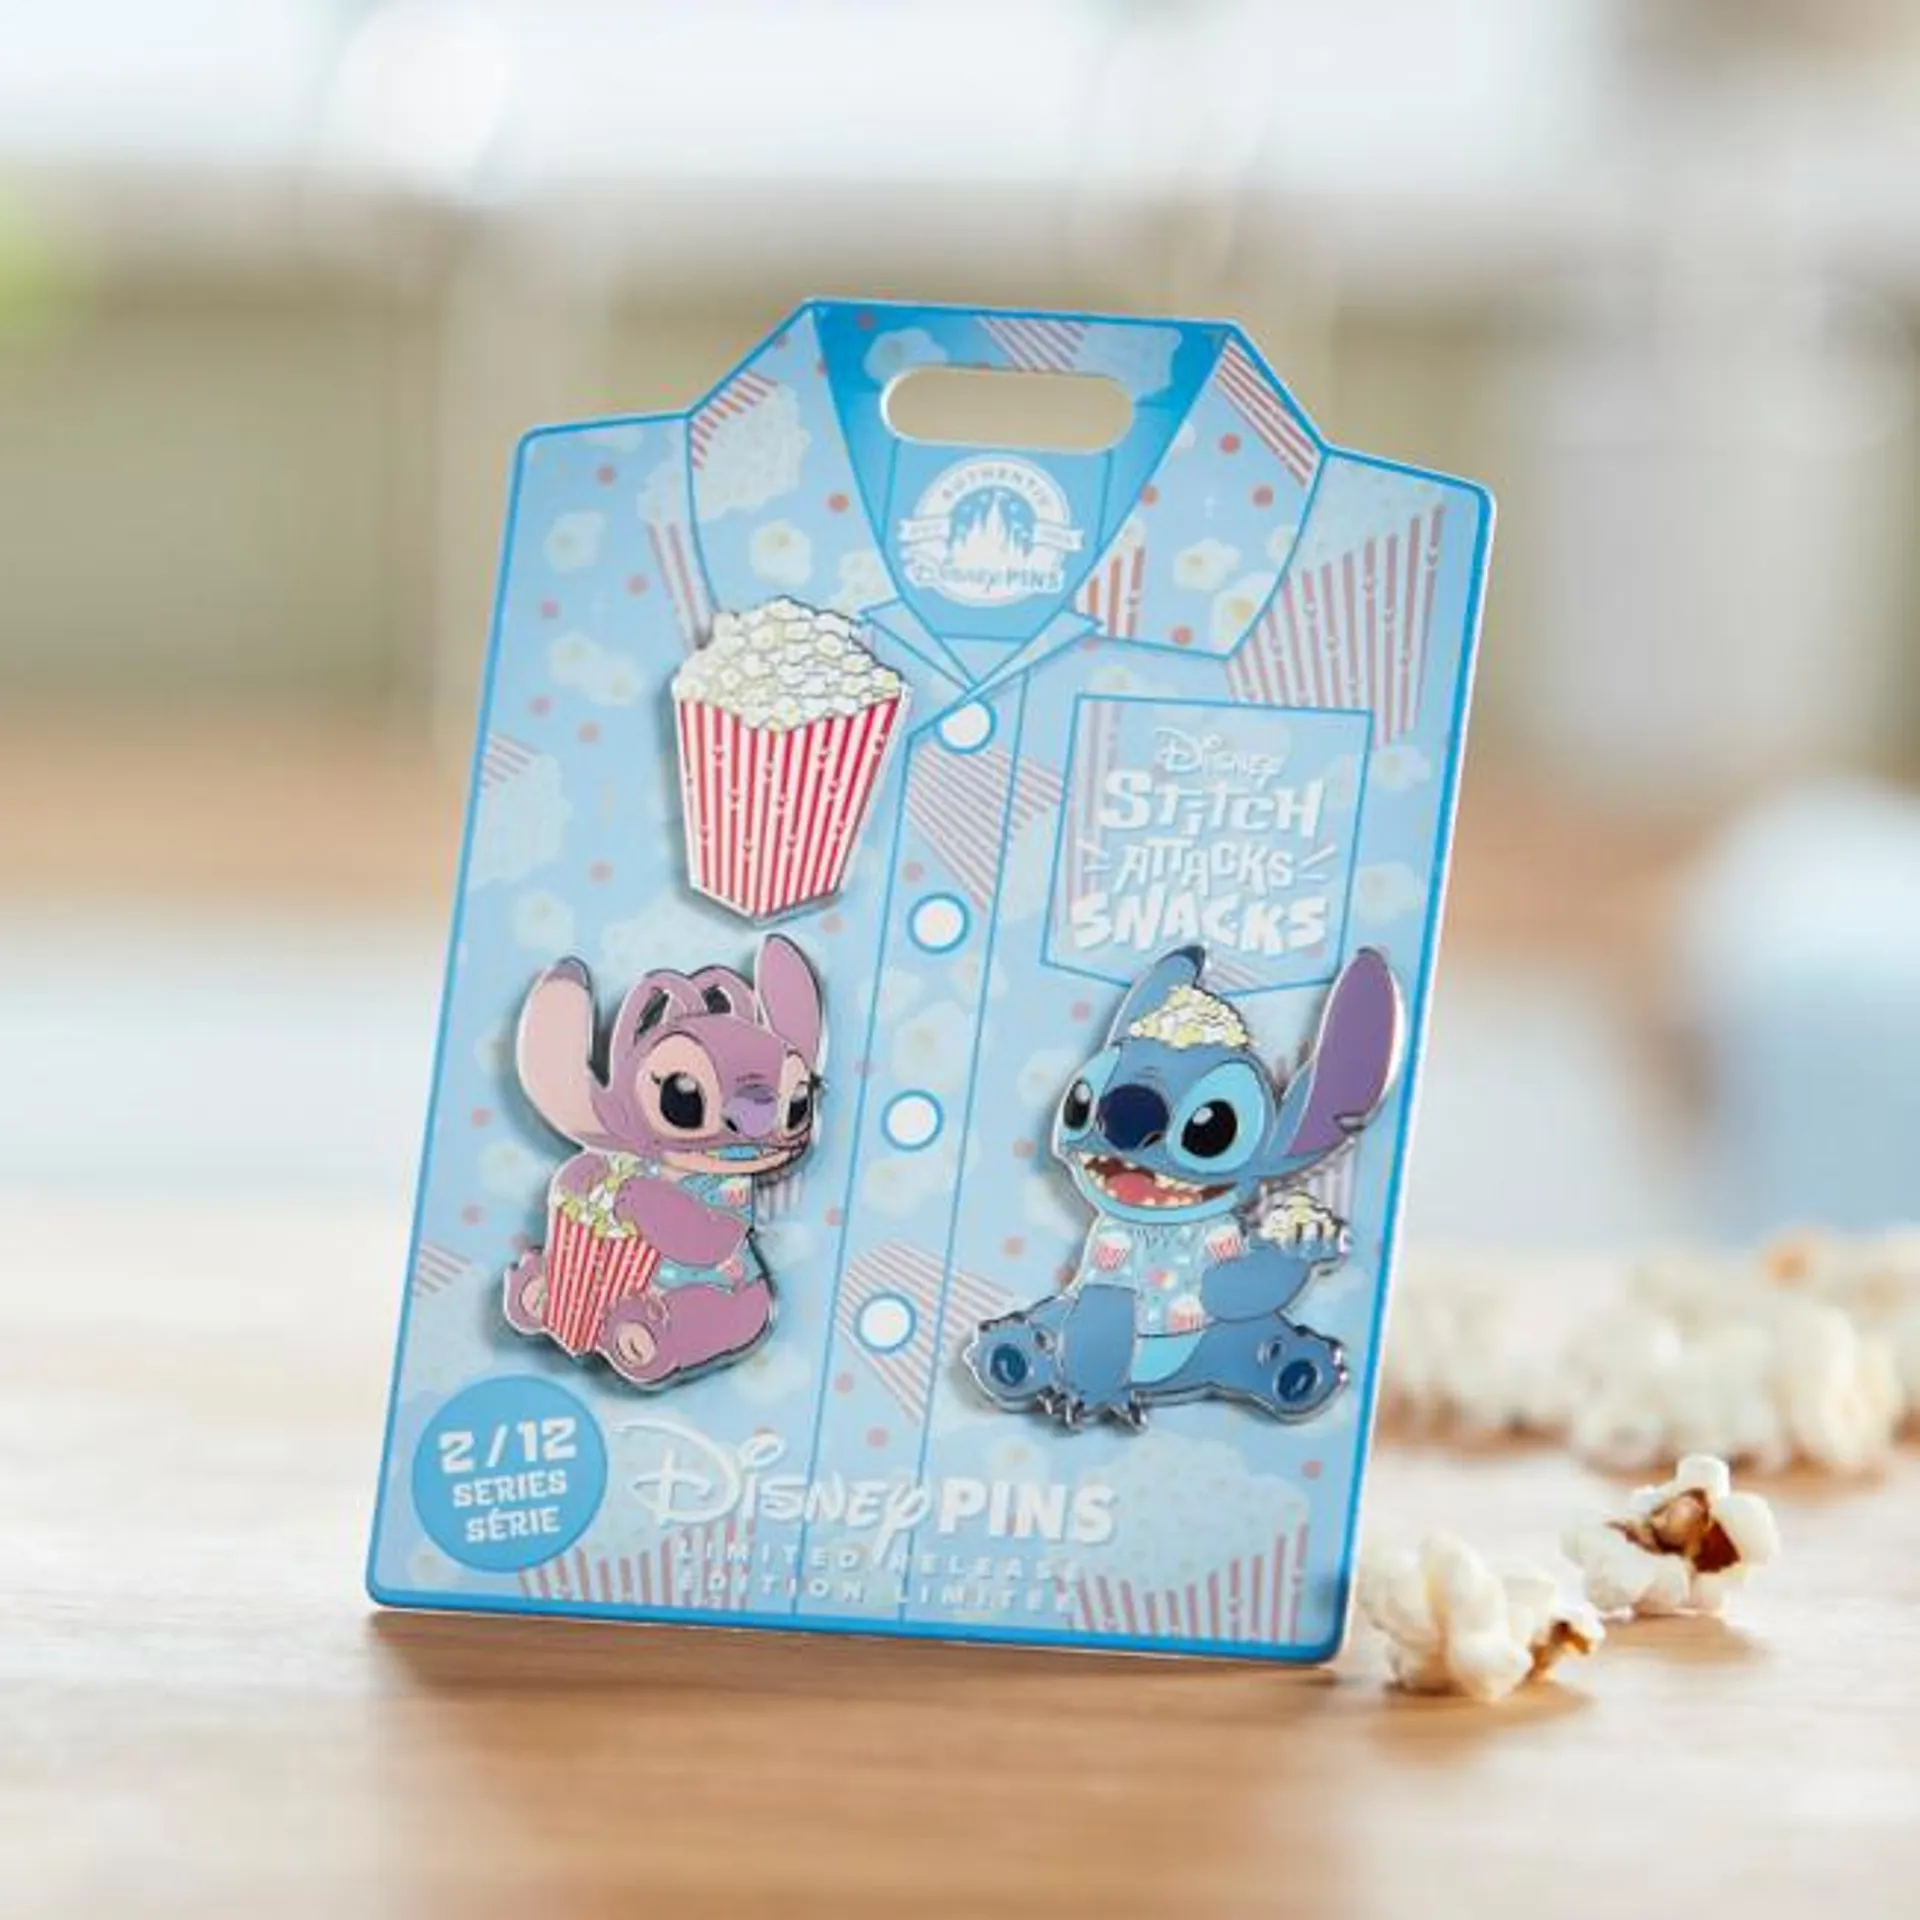 Stitch Attacks Snacks Limited Release Pin Set, Popcorn, February